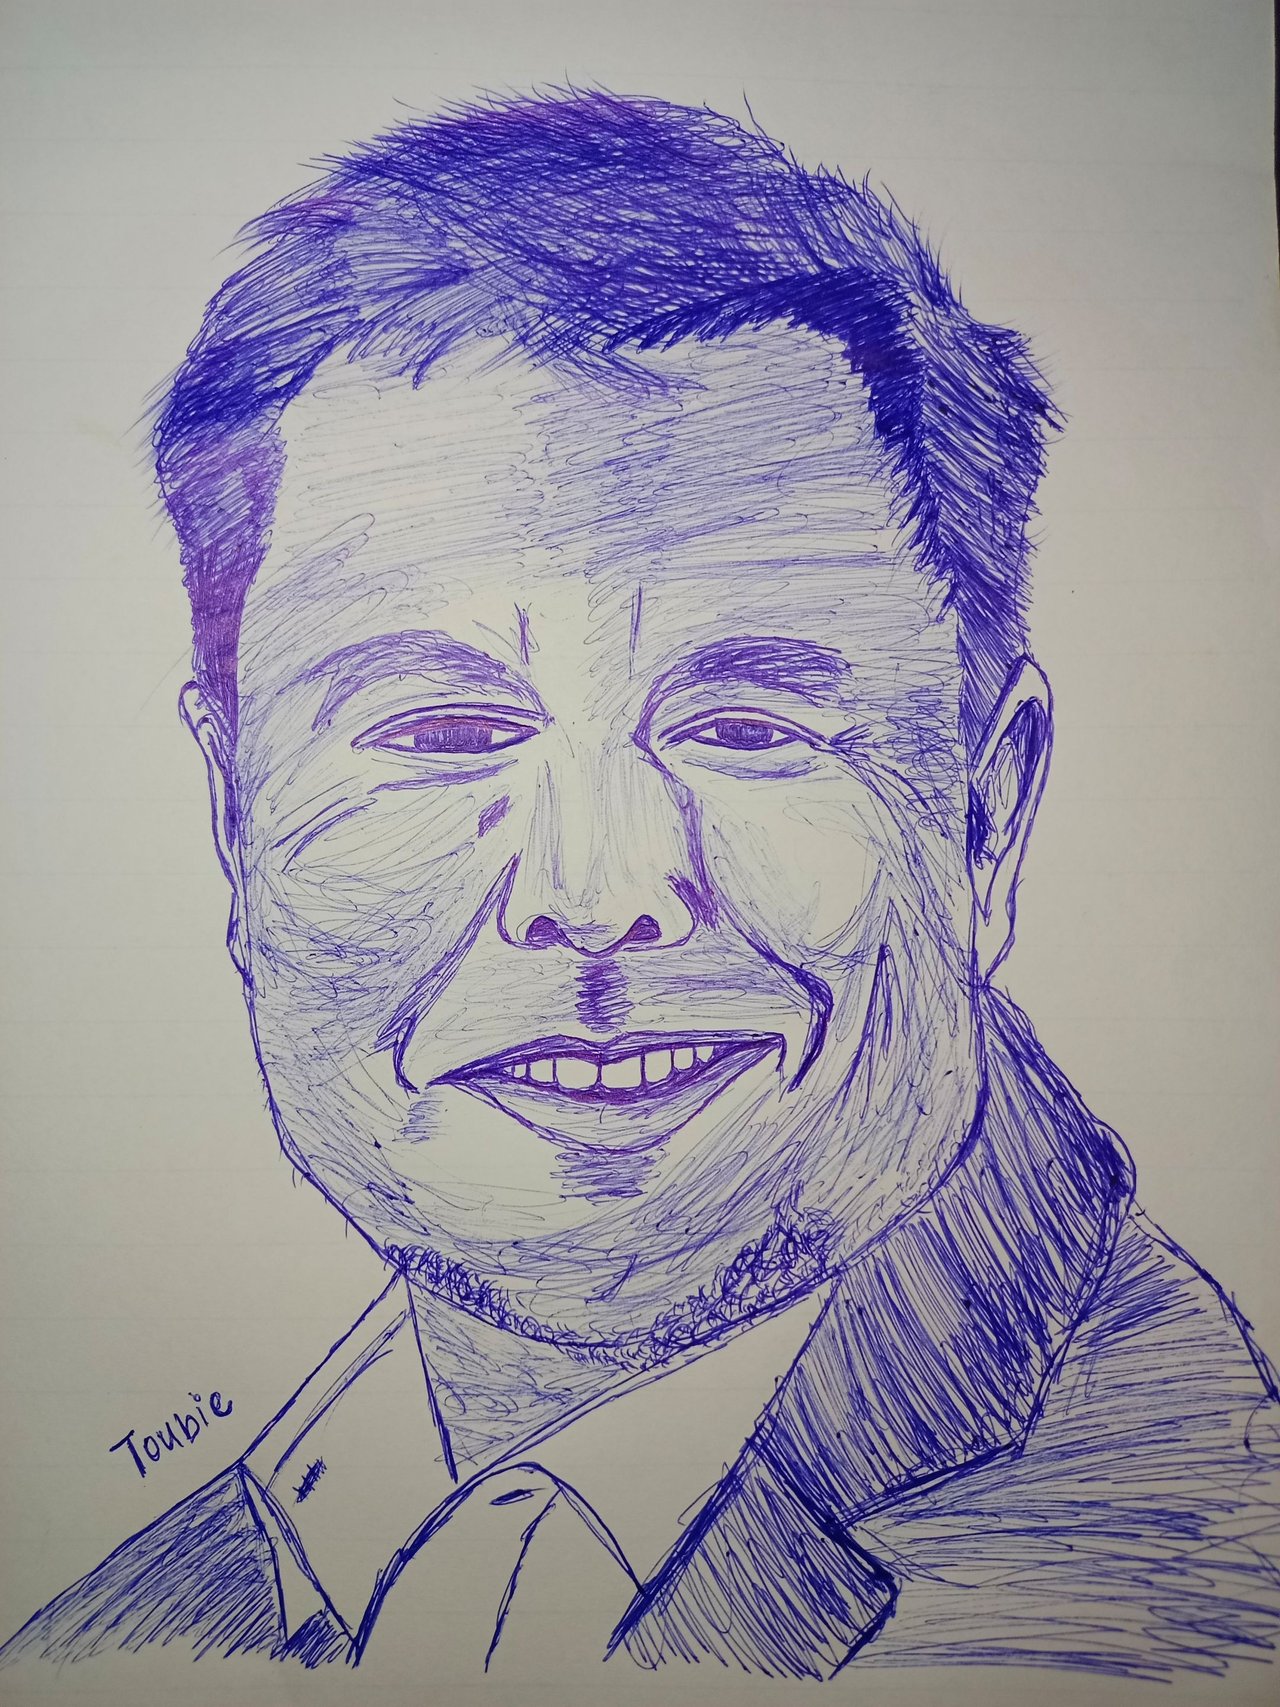 Elon Musk Sketch Final by Rkhan1013 on DeviantArt